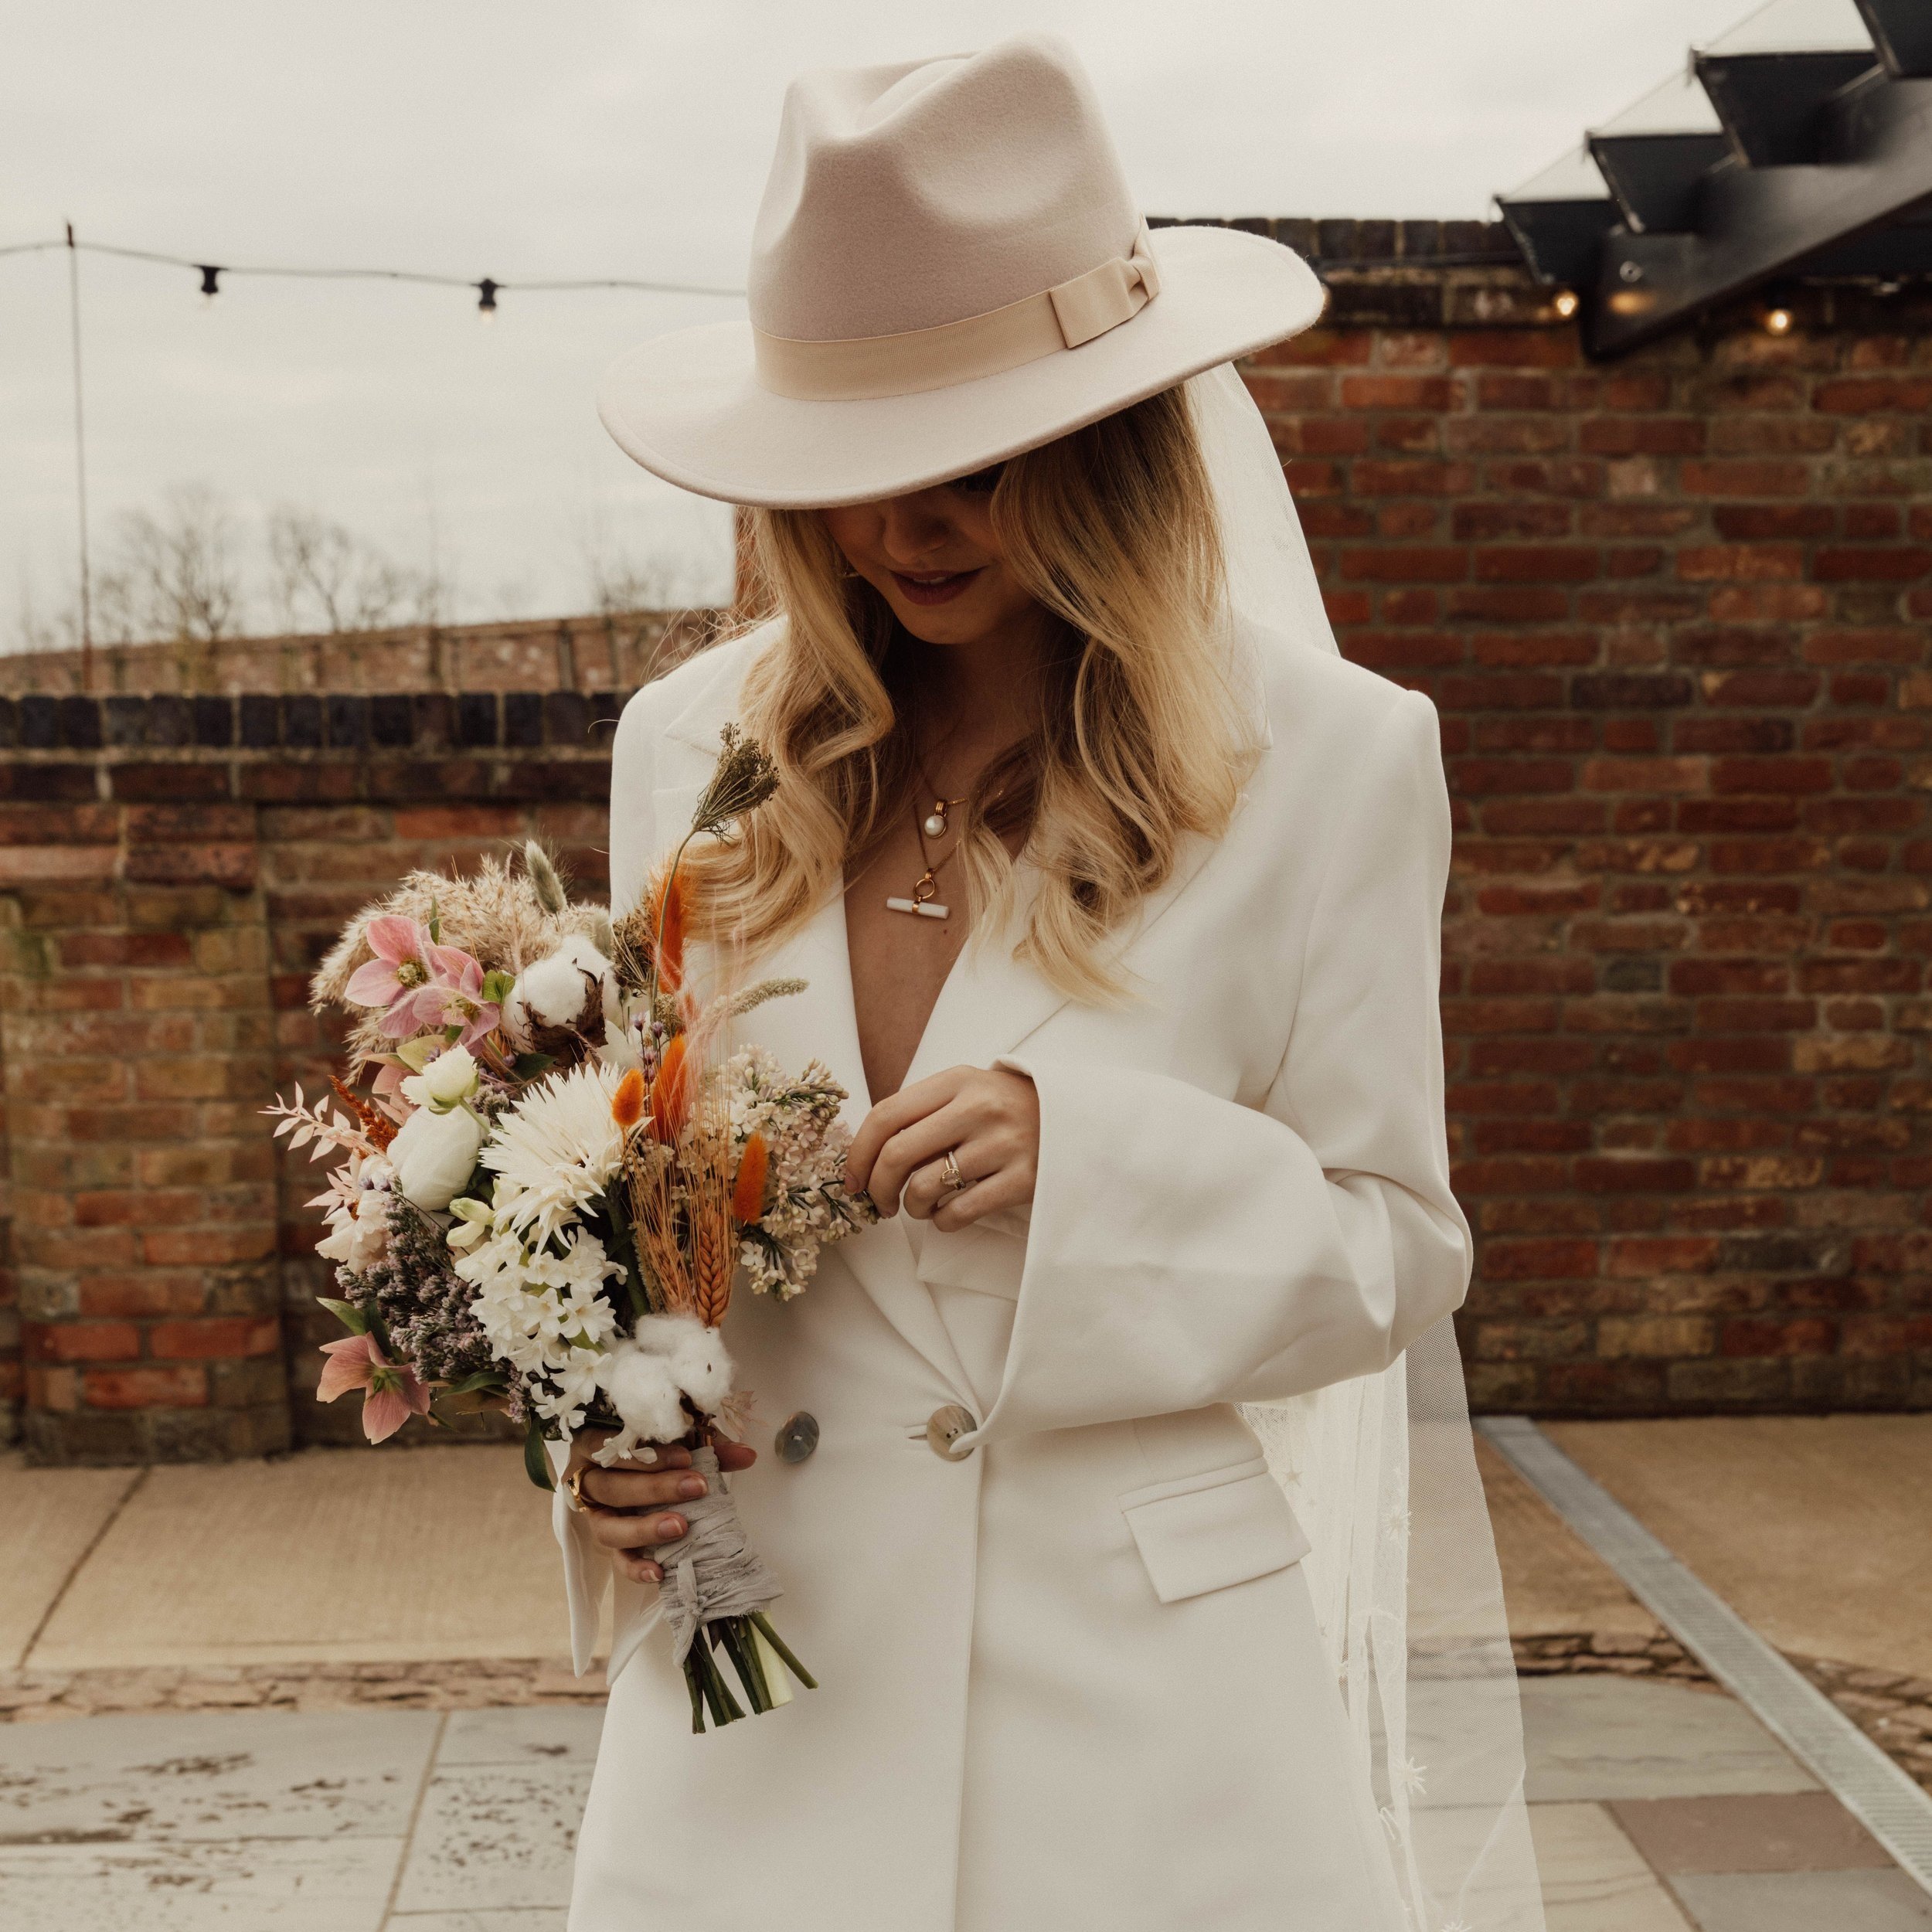 Bridal+Fedora+for+Cool+Bride+_+Bridal+Suit+and+Wedding+Veil+_+Rebecca+Anne+Designs.jpg